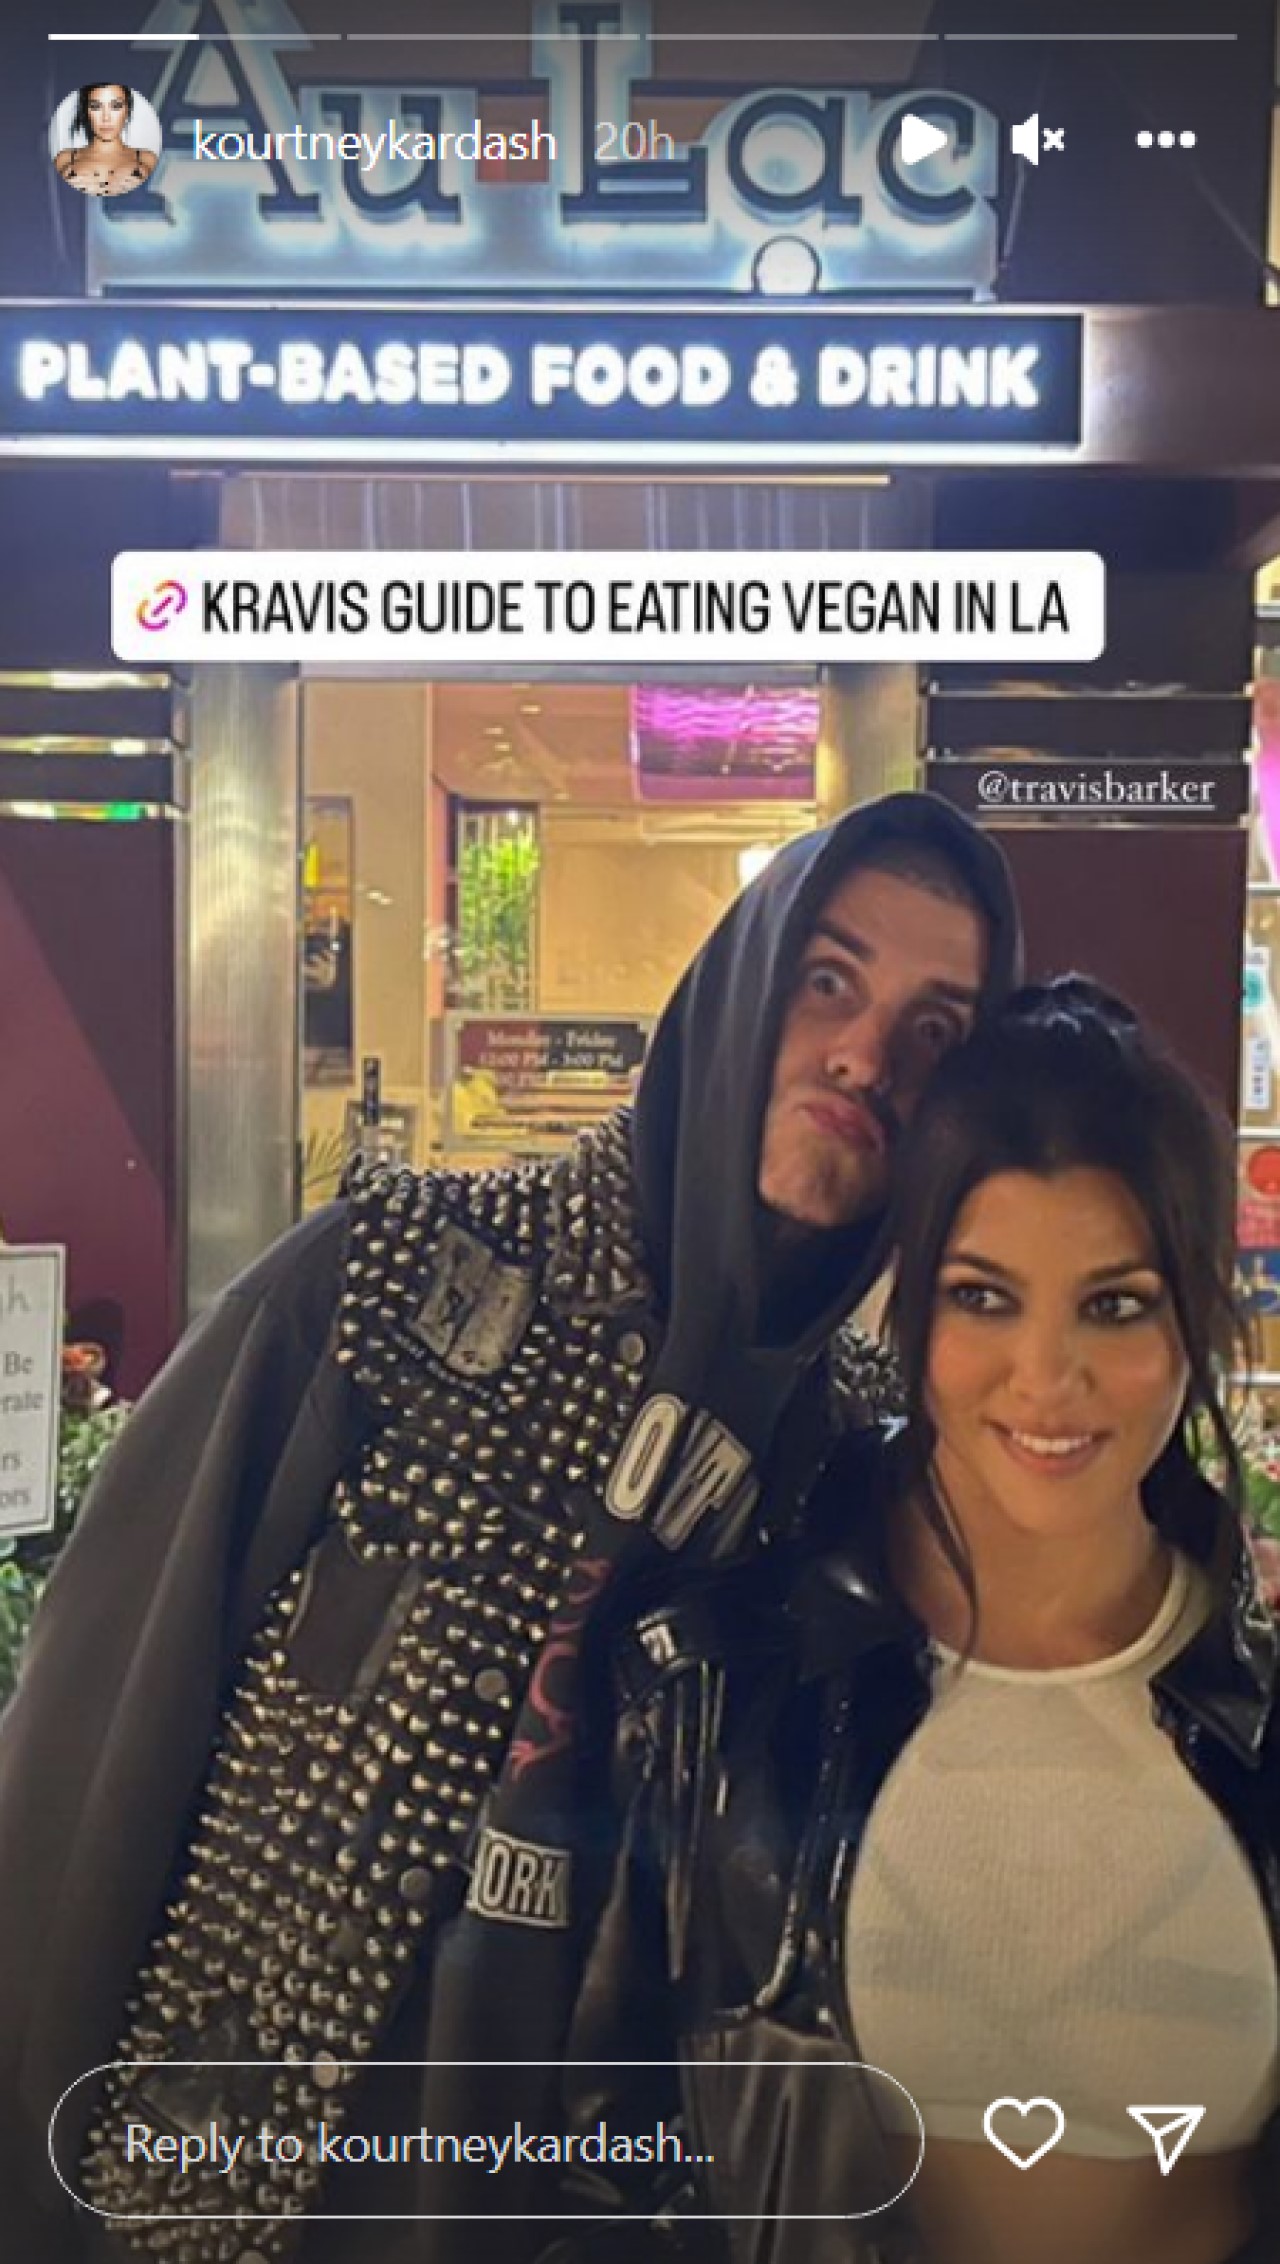 Kourtney Kardashian shares a photo of her and Travis Parker on Instagram.